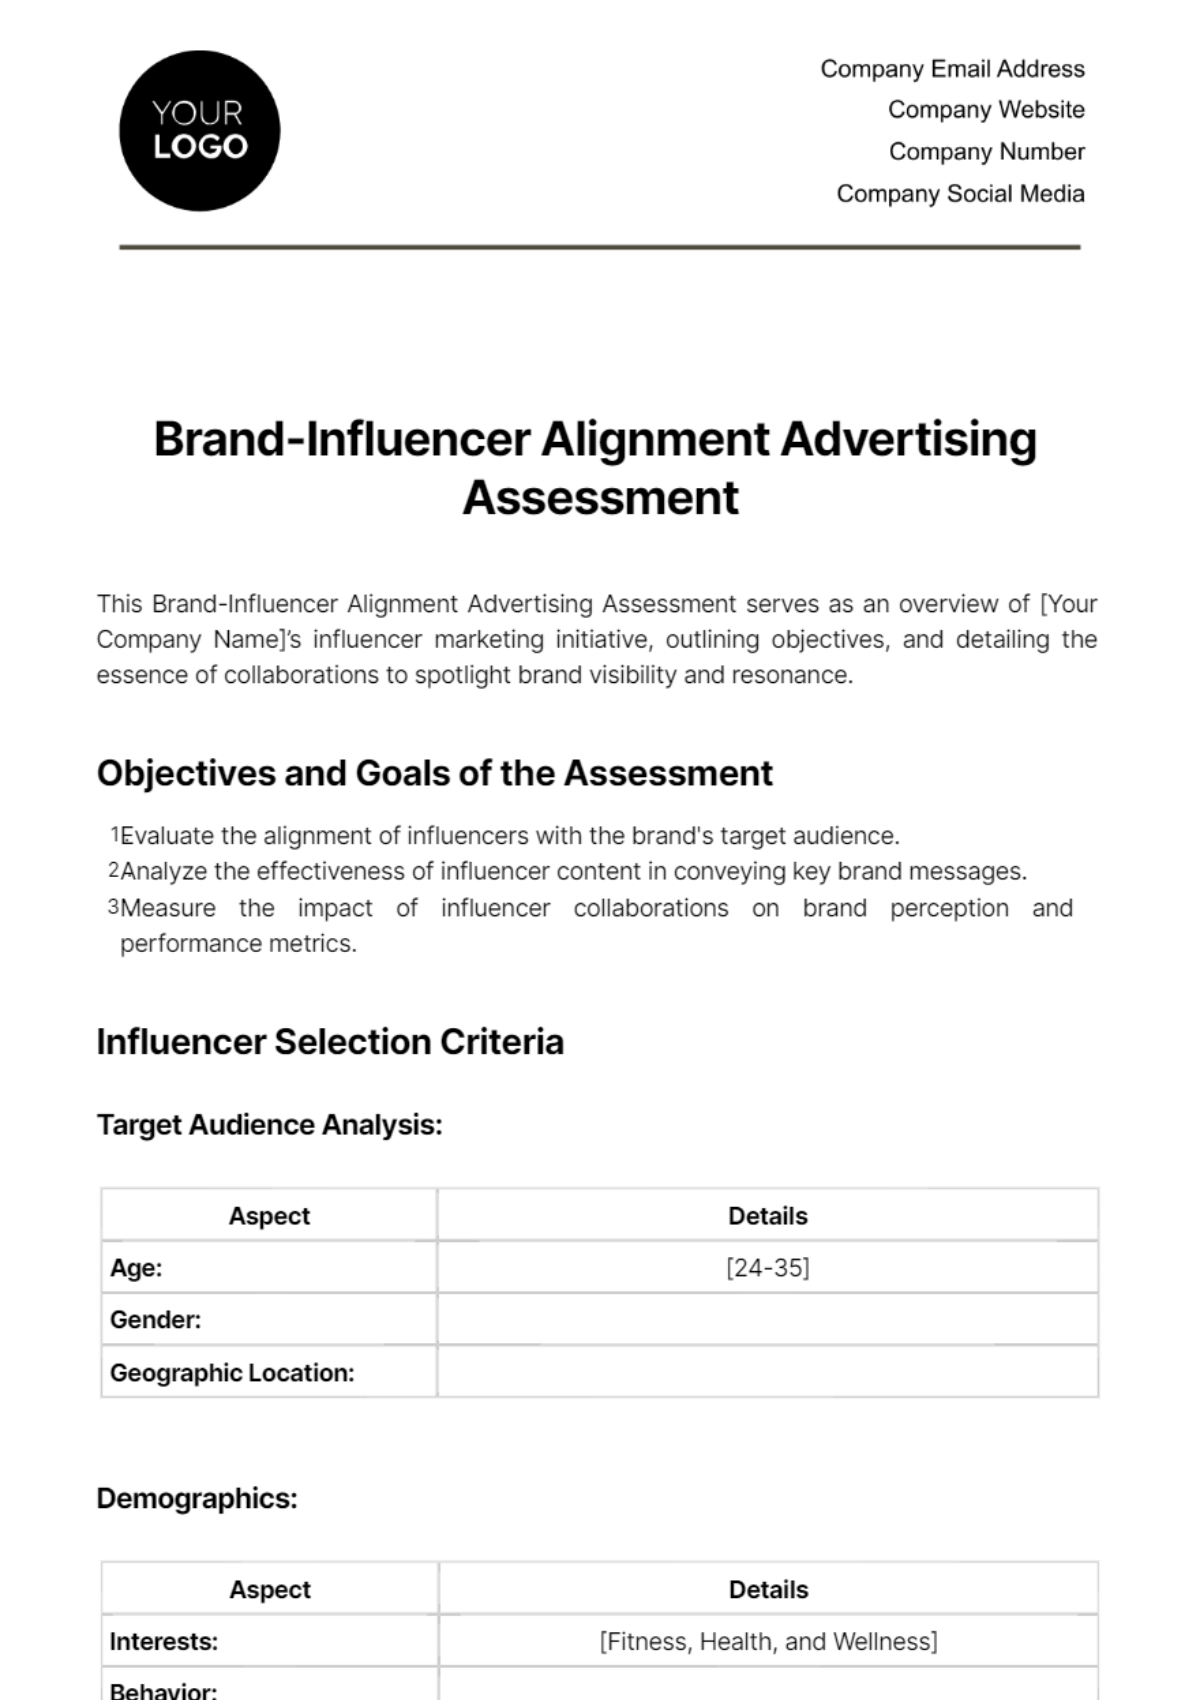 Brand-Influencer Alignment Advertising Assessment Template